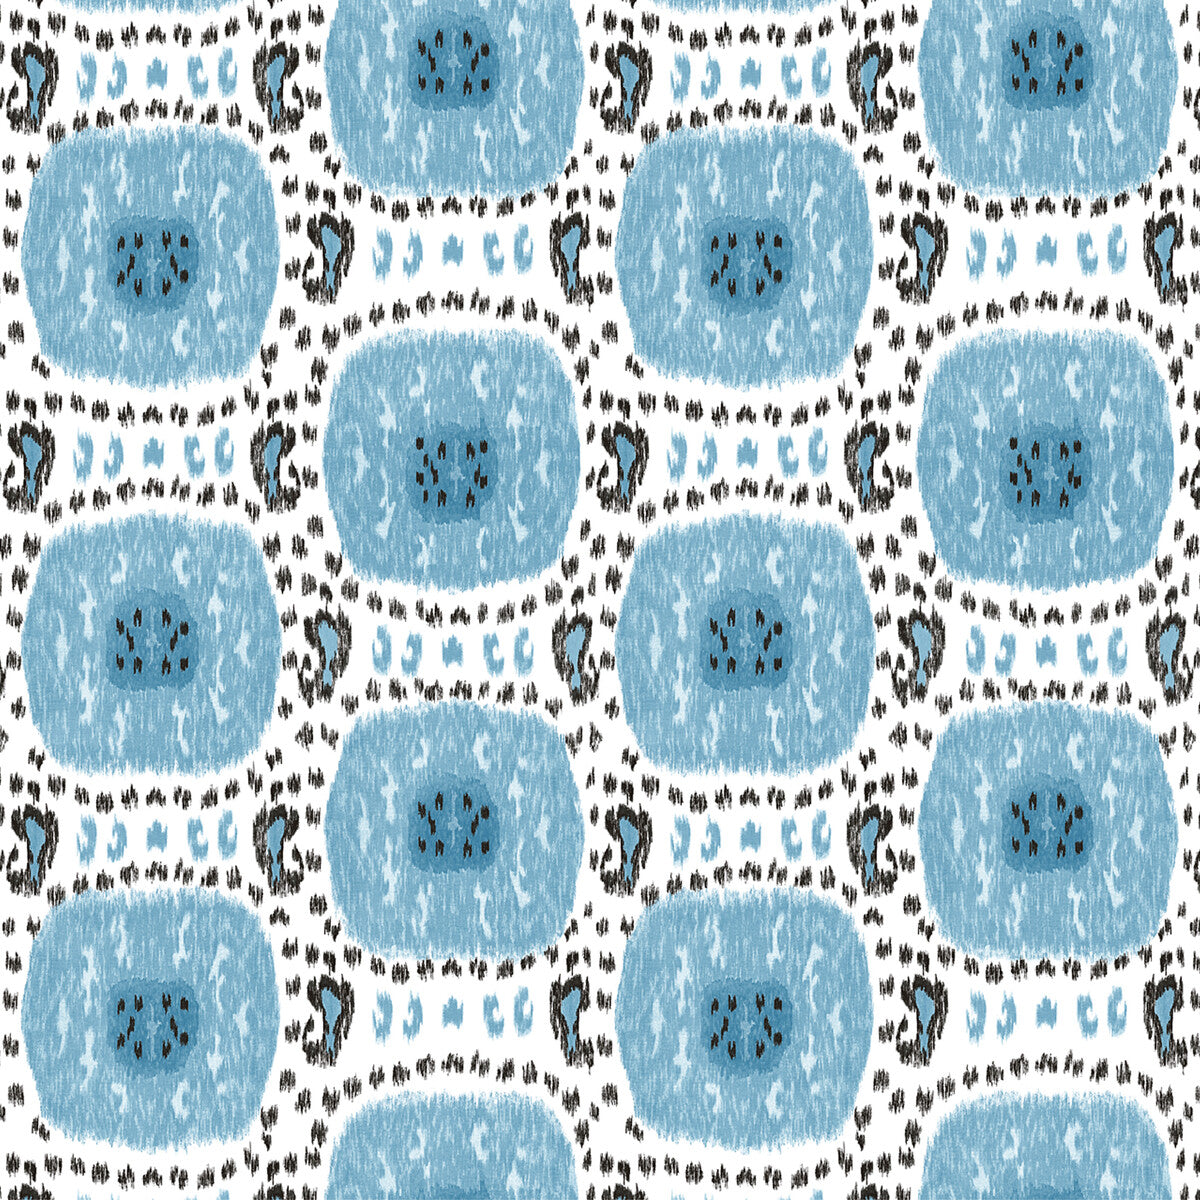 Gran Sol fabric in azul color - pattern GDT5541.003.0 - by Gaston y Daniela in the Gaston Libreria collection